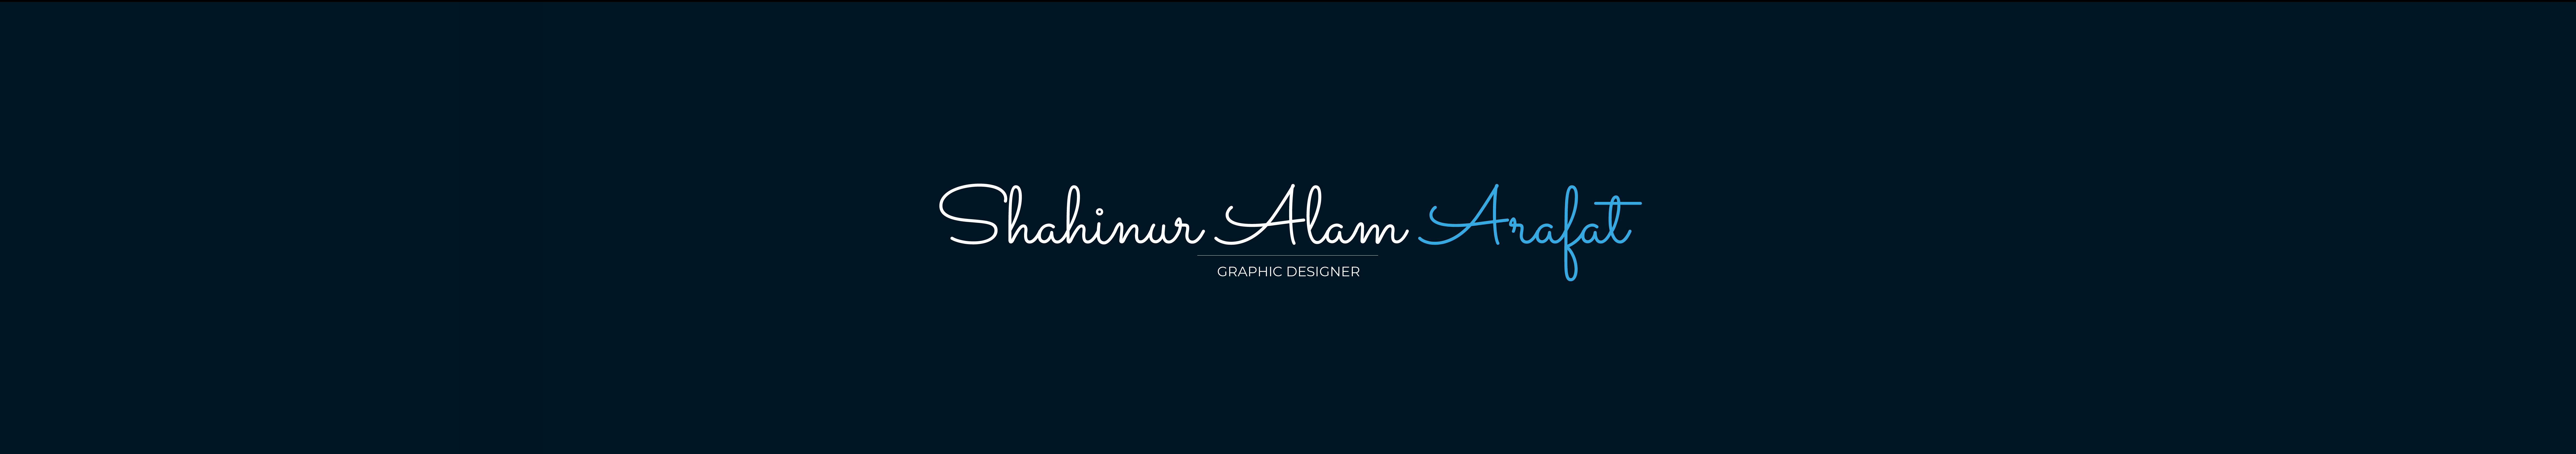 Shahinur Alam Arafat's profile banner